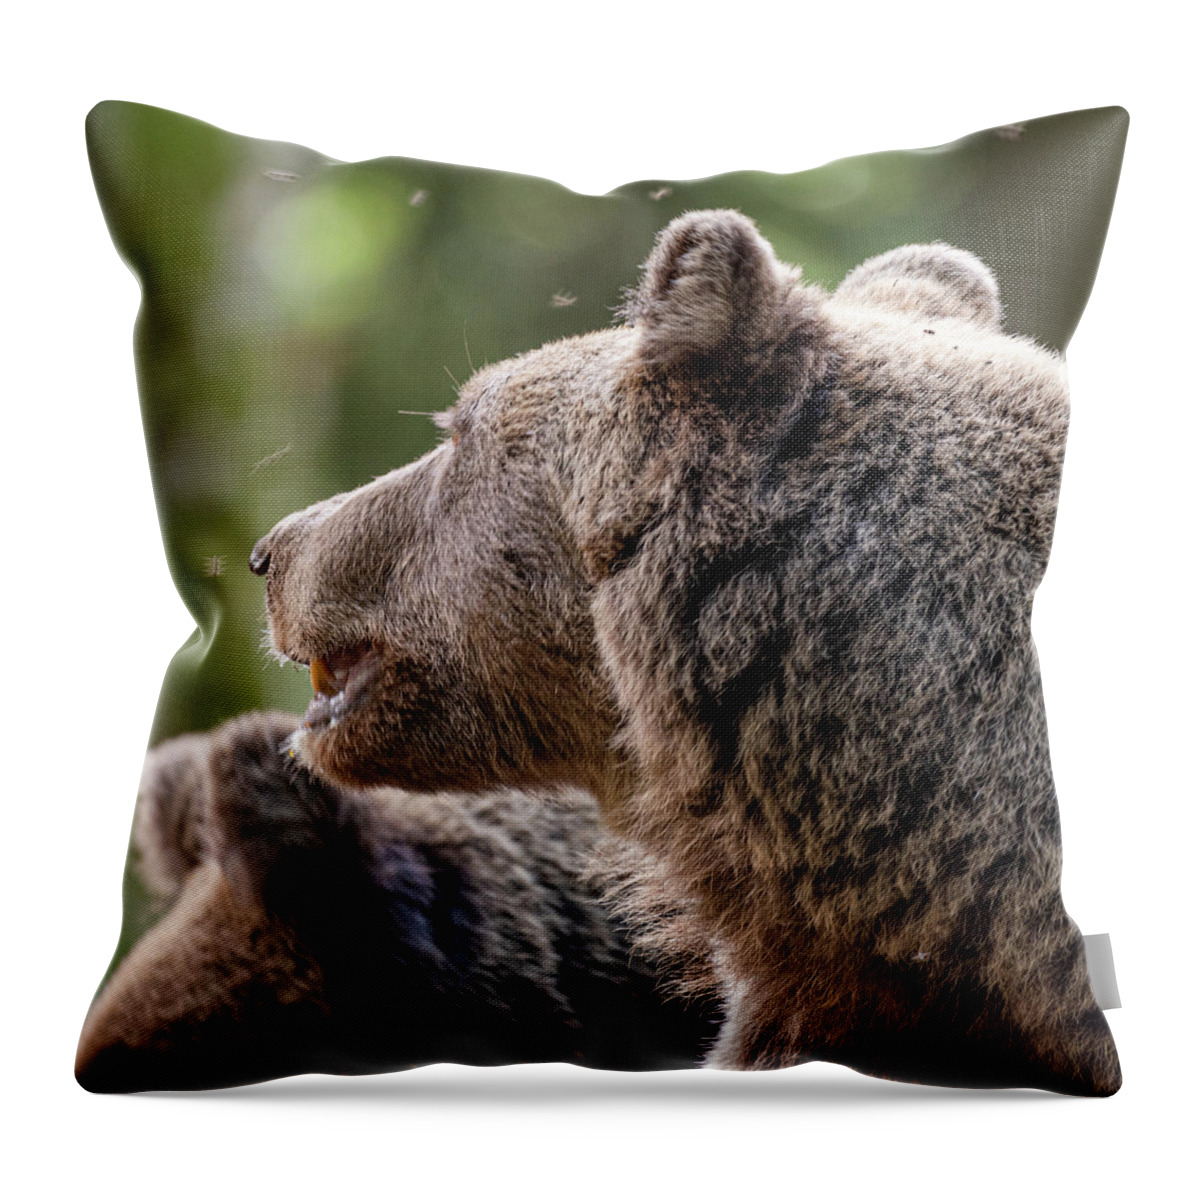 Brown Bear Throw Pillow featuring the photograph Brown Bear Portrait 2 by Adrian O Brien